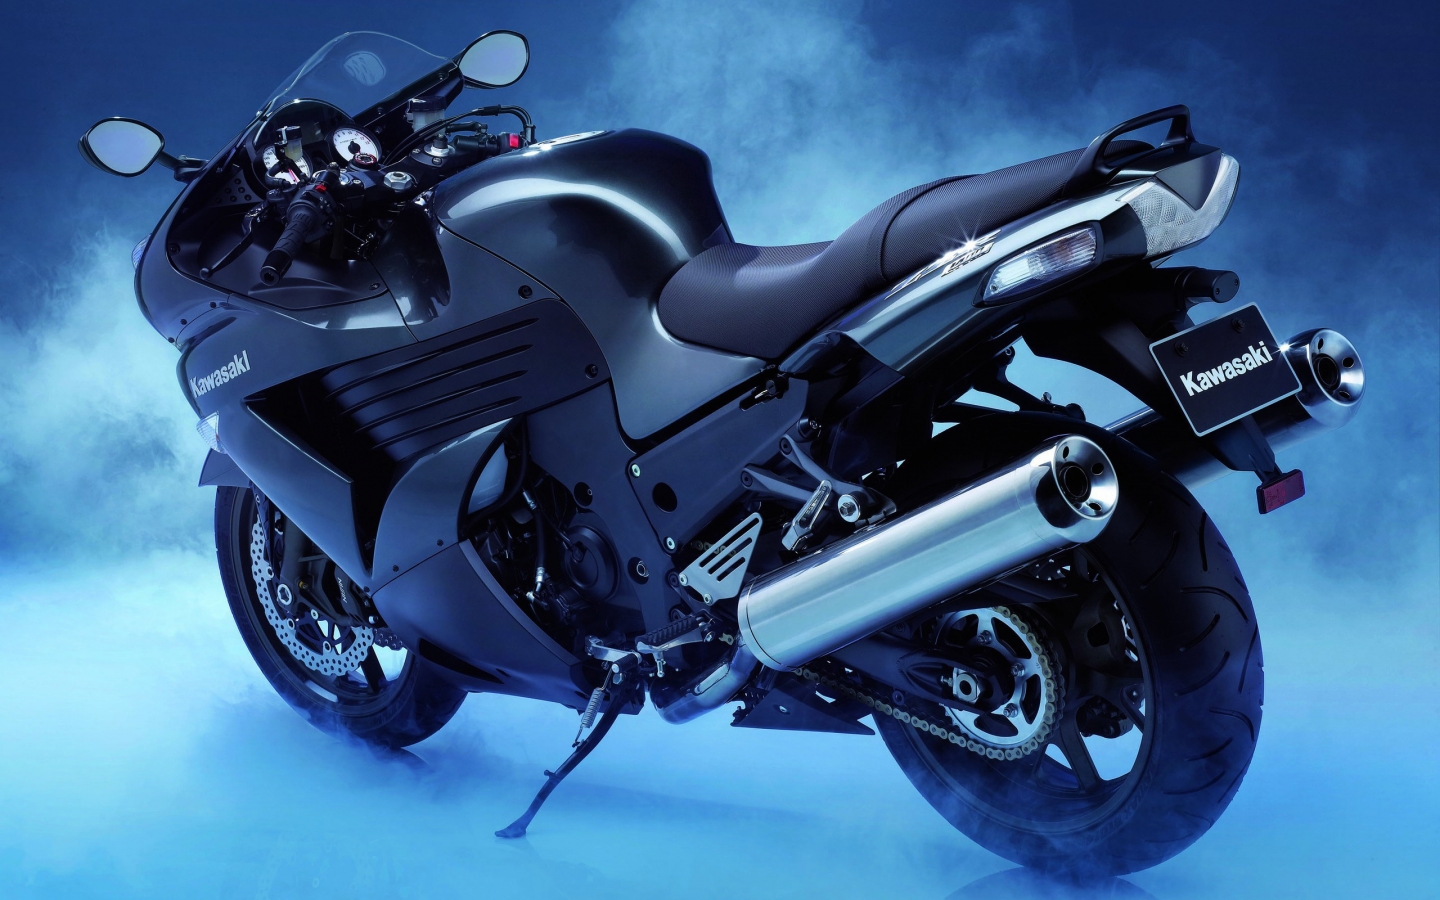 Kawasaki Ninja Black for 1440 x 900 widescreen resolution